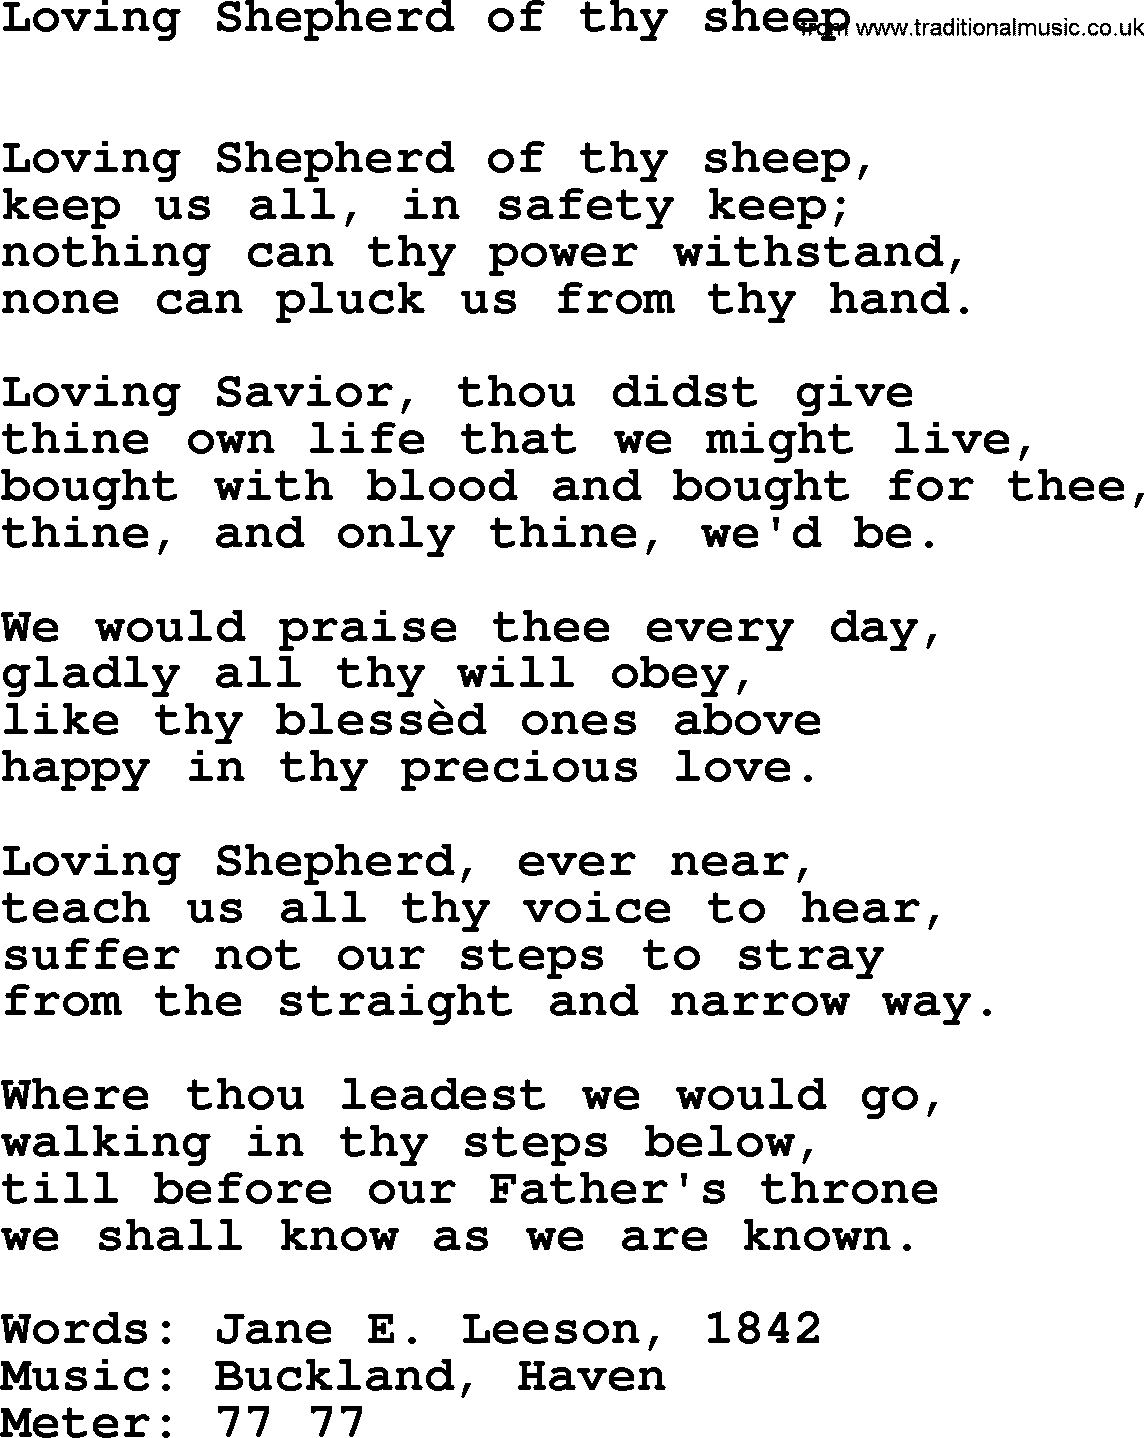 Book of Common Praise Hymn: Loving Shepherd Of Thy Sheep.txt lyrics with midi music